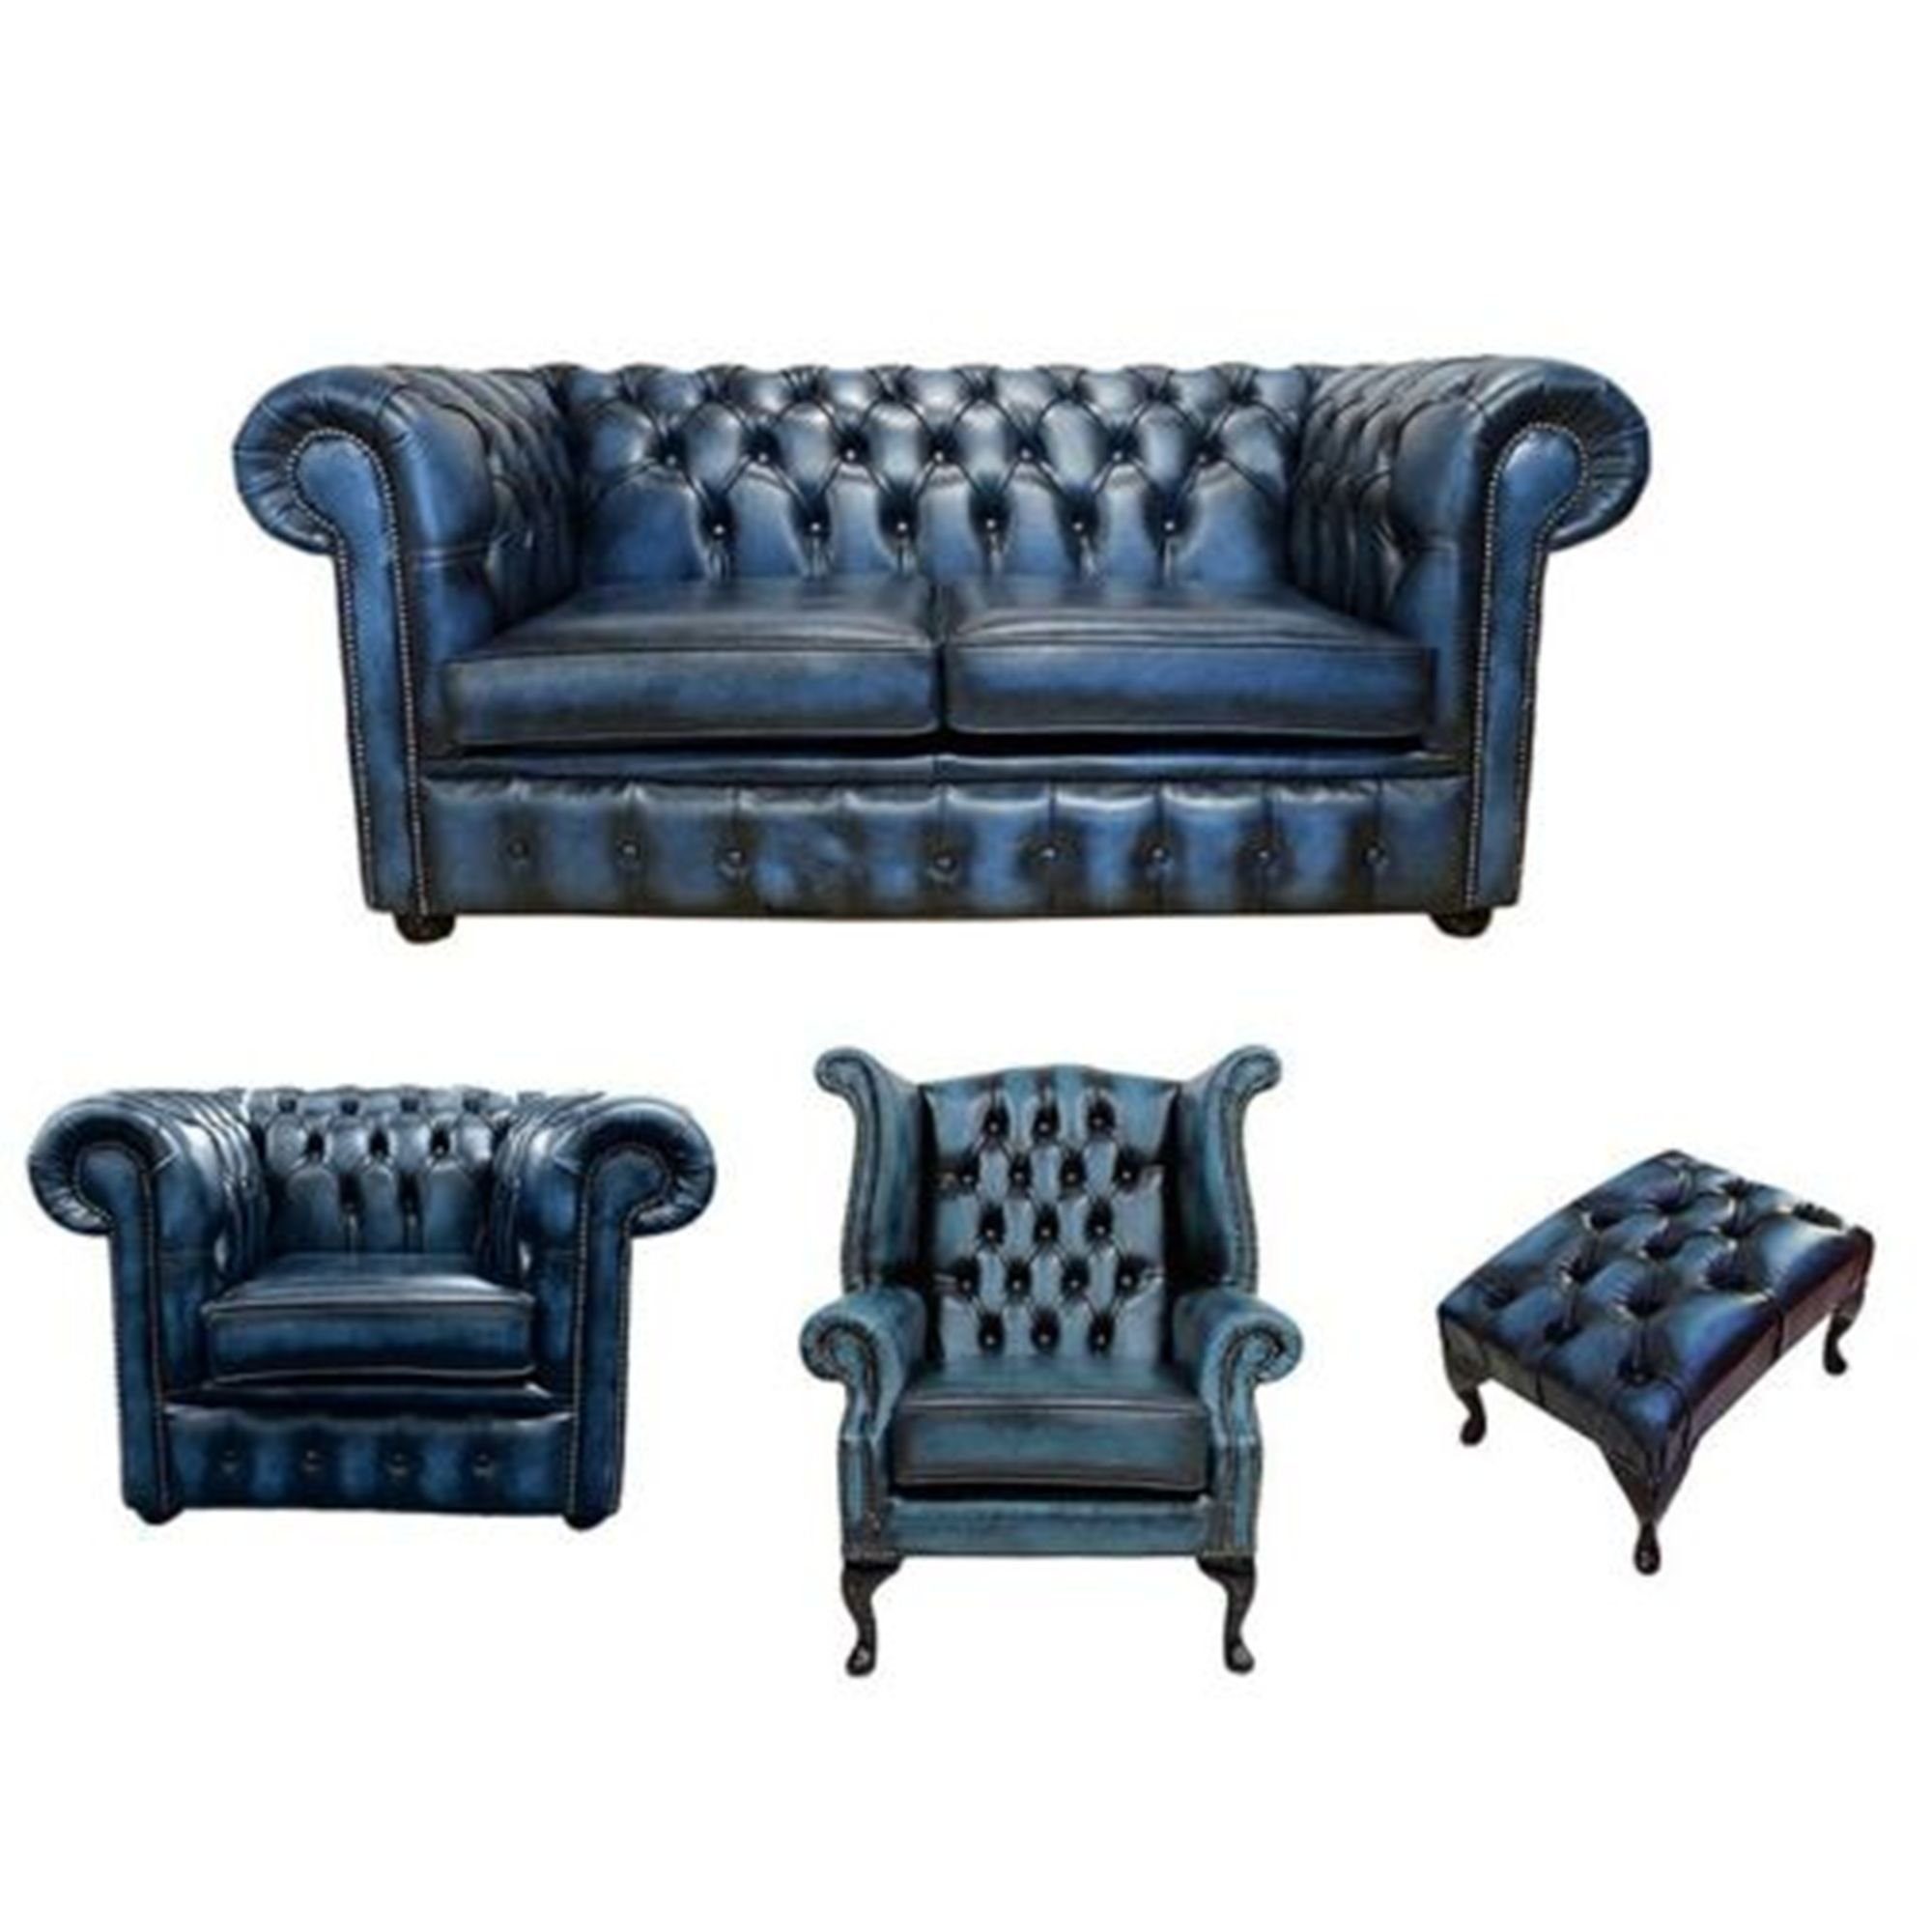 JVmoebel Sofa Blaue Luxus Sofagarnitur 2+1 Sitzer + Ohrensessel+Hocker Neu, Made in Europe | Alle Sofas